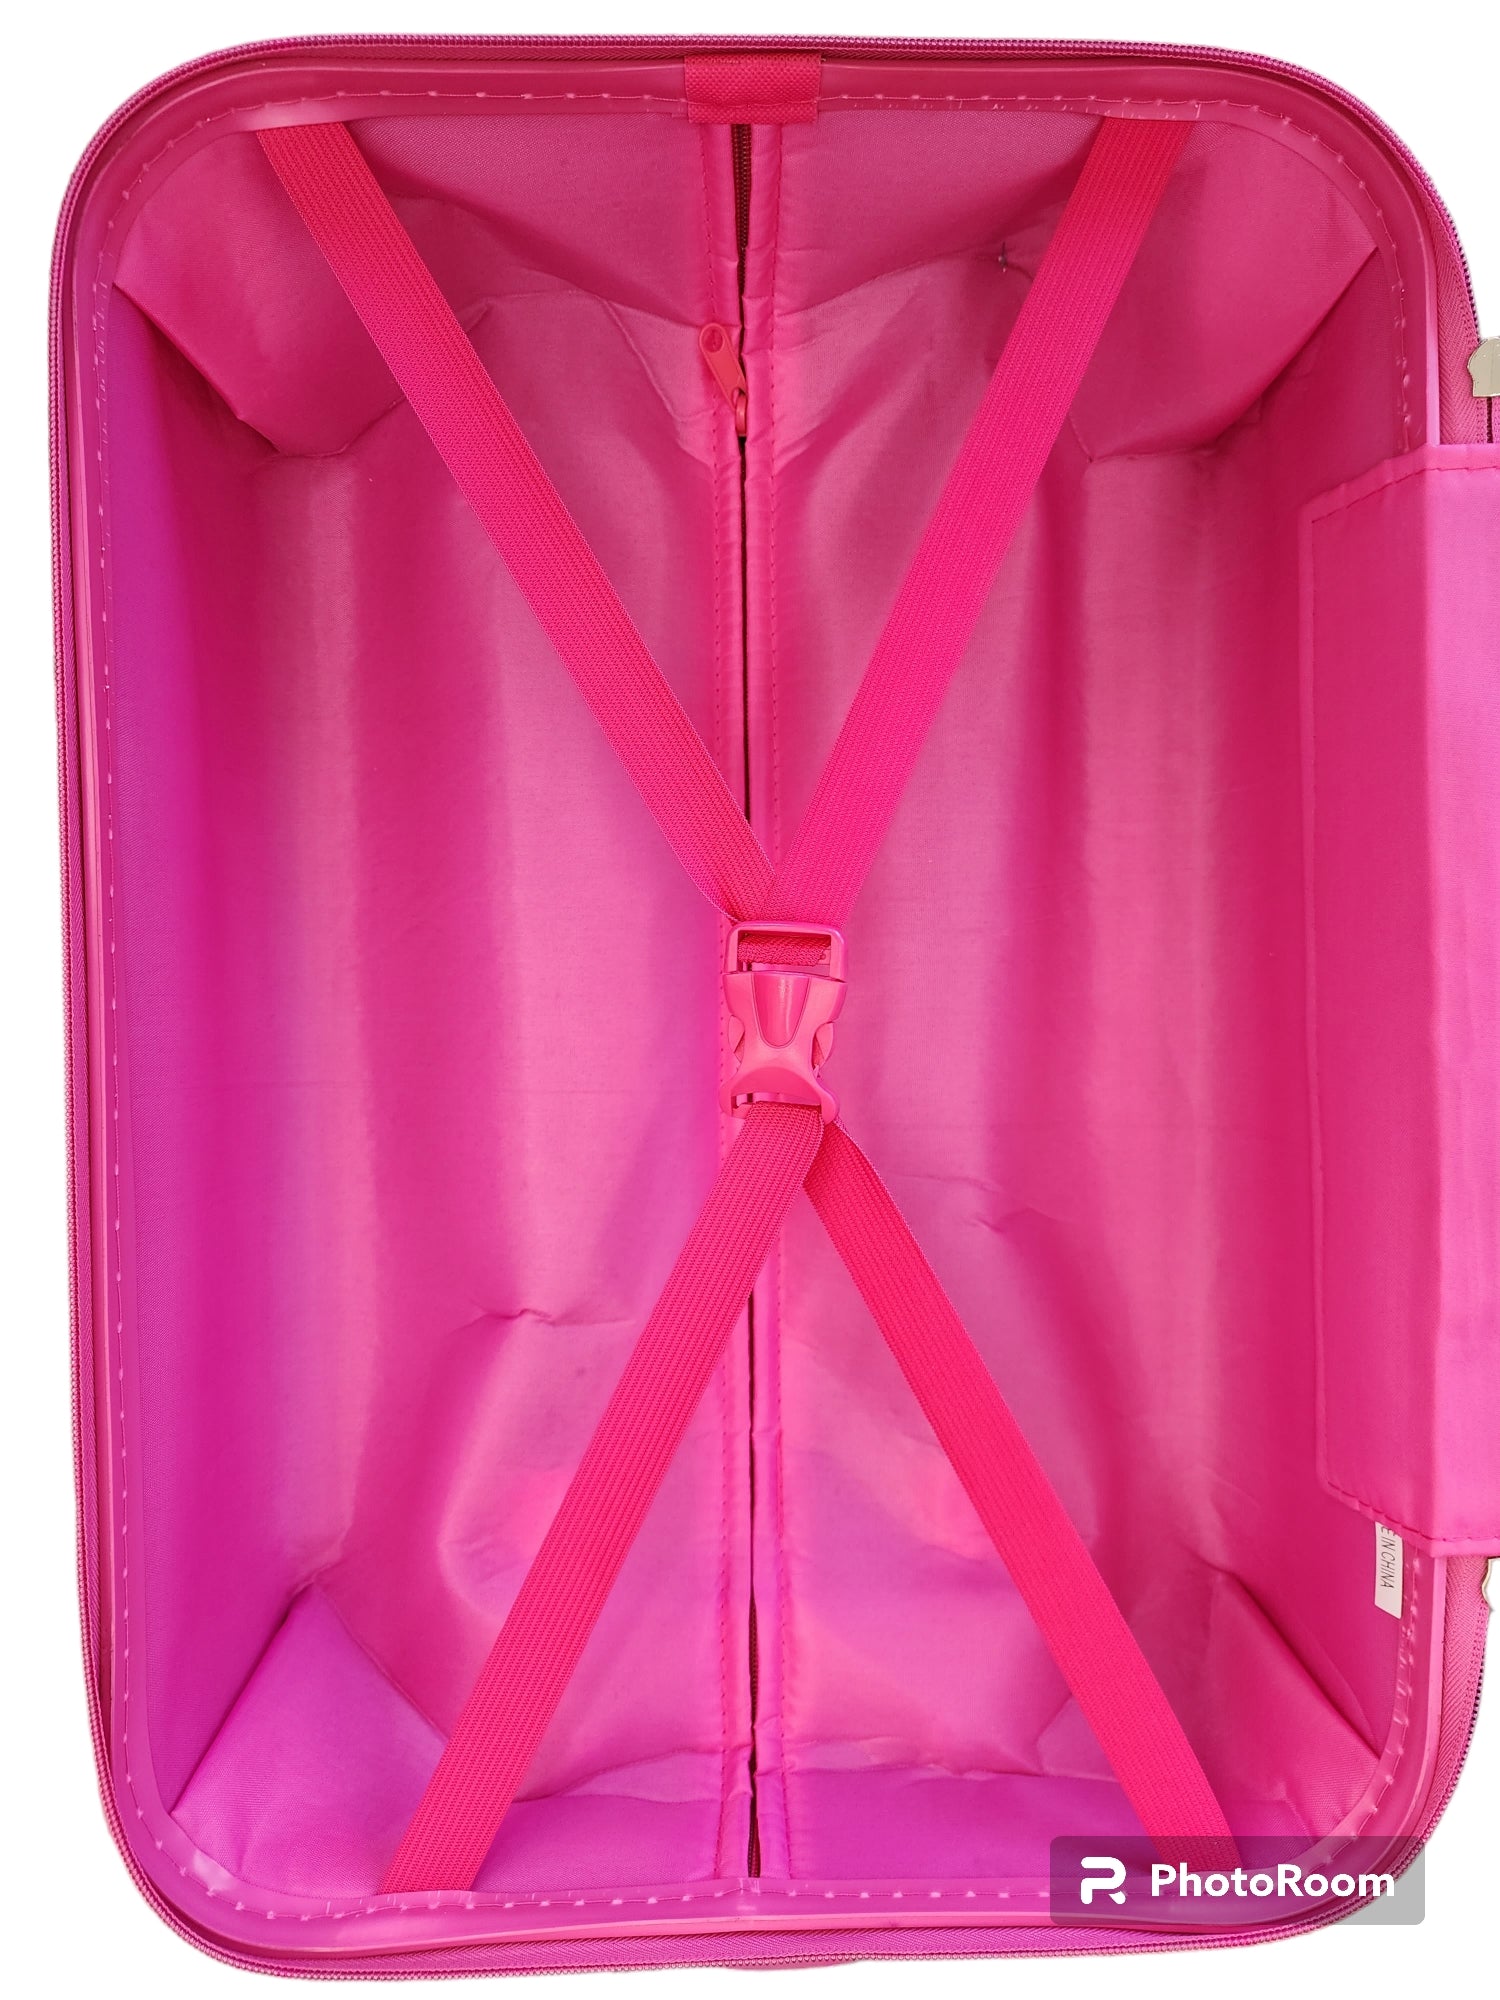 Kidz Bagz -55cm Owl print spinner suitcase - Pink-4